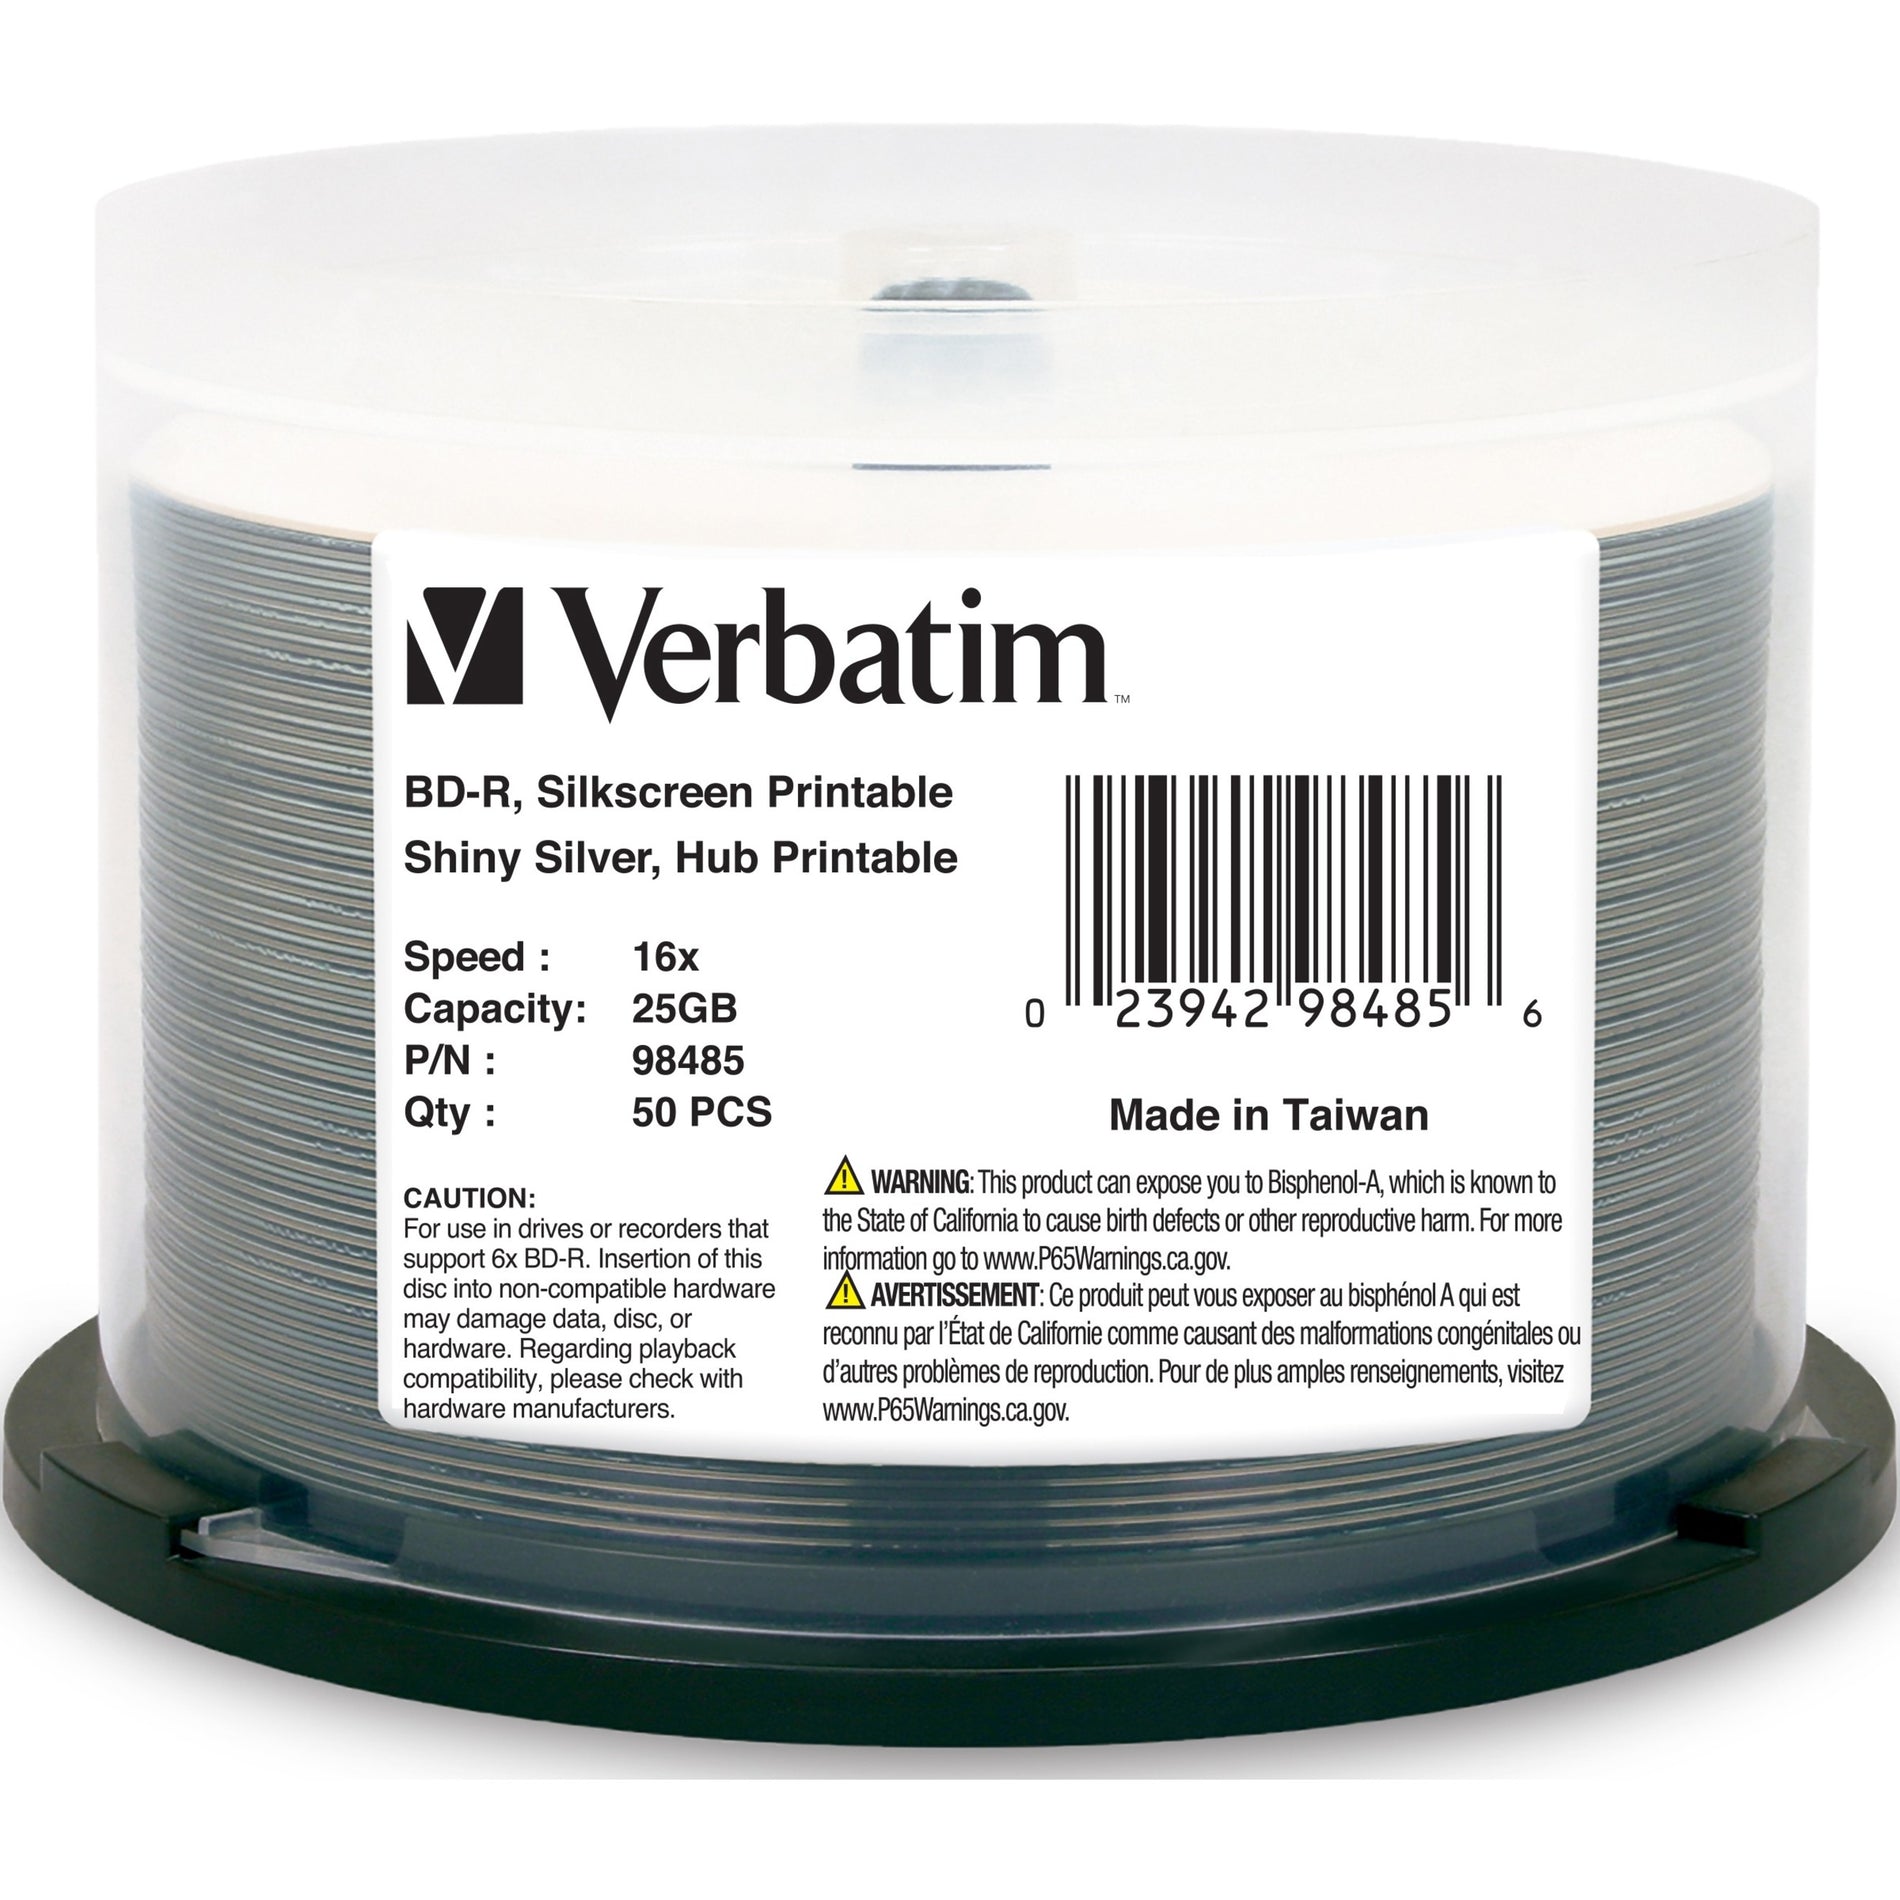 Verbatim 98485 16x 25GB Blu-ray Recordable Media, Shiny Silver Silk Screen Printable, Hub Printable - 50pk Spindle